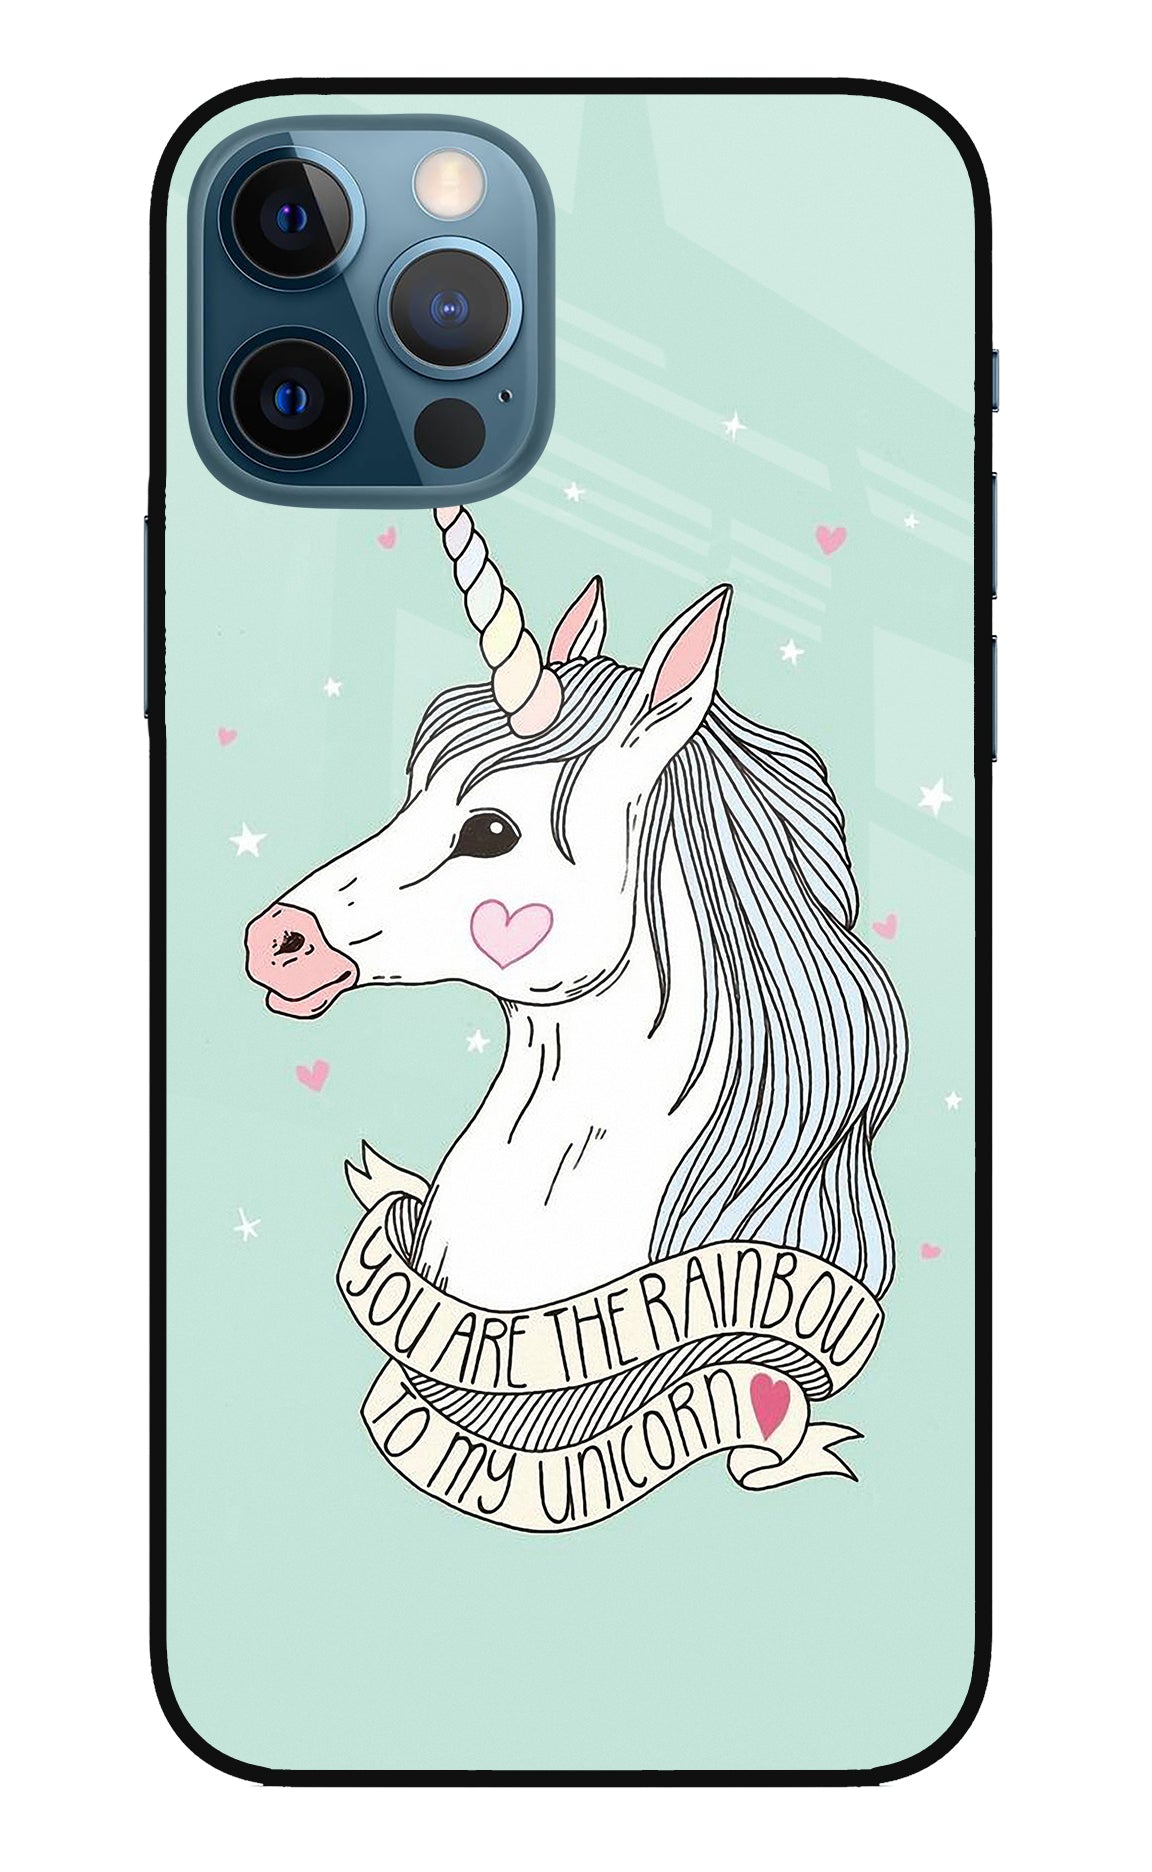 Unicorn Wallpaper iPhone 12 Pro Back Cover